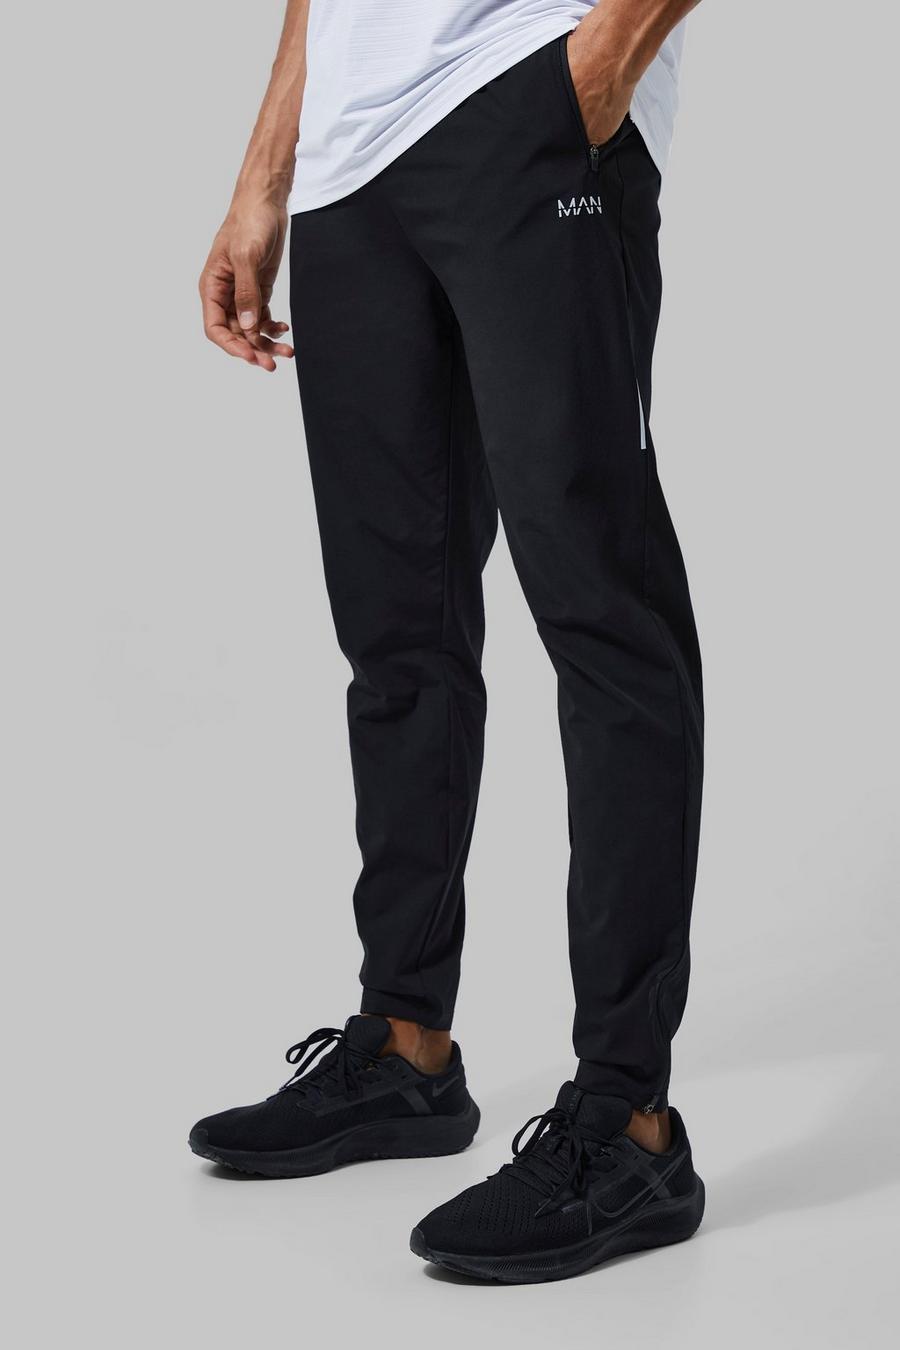 Pantalón deportivo Tall MAN Active ligero resistente, Black